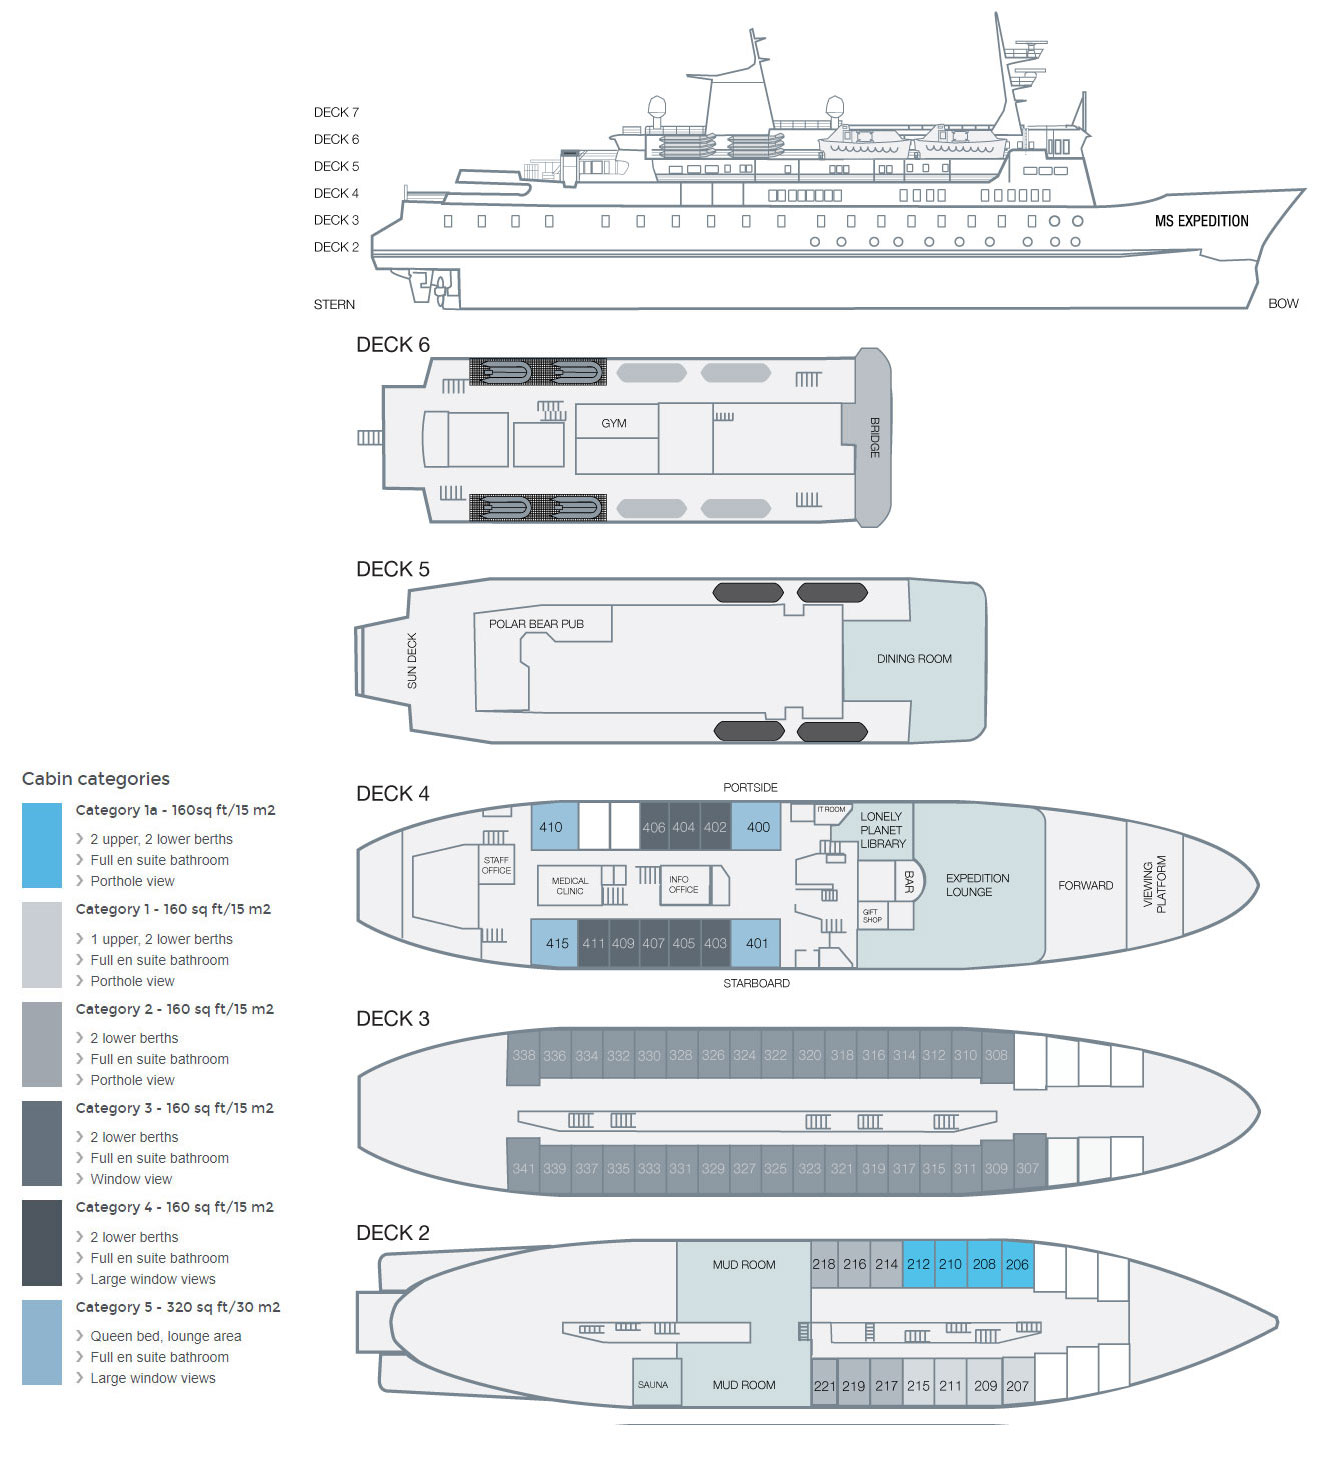 Deck plan of MS Expedition polar ship showing 5 passenger decks, 6 cabin categories & details for each.